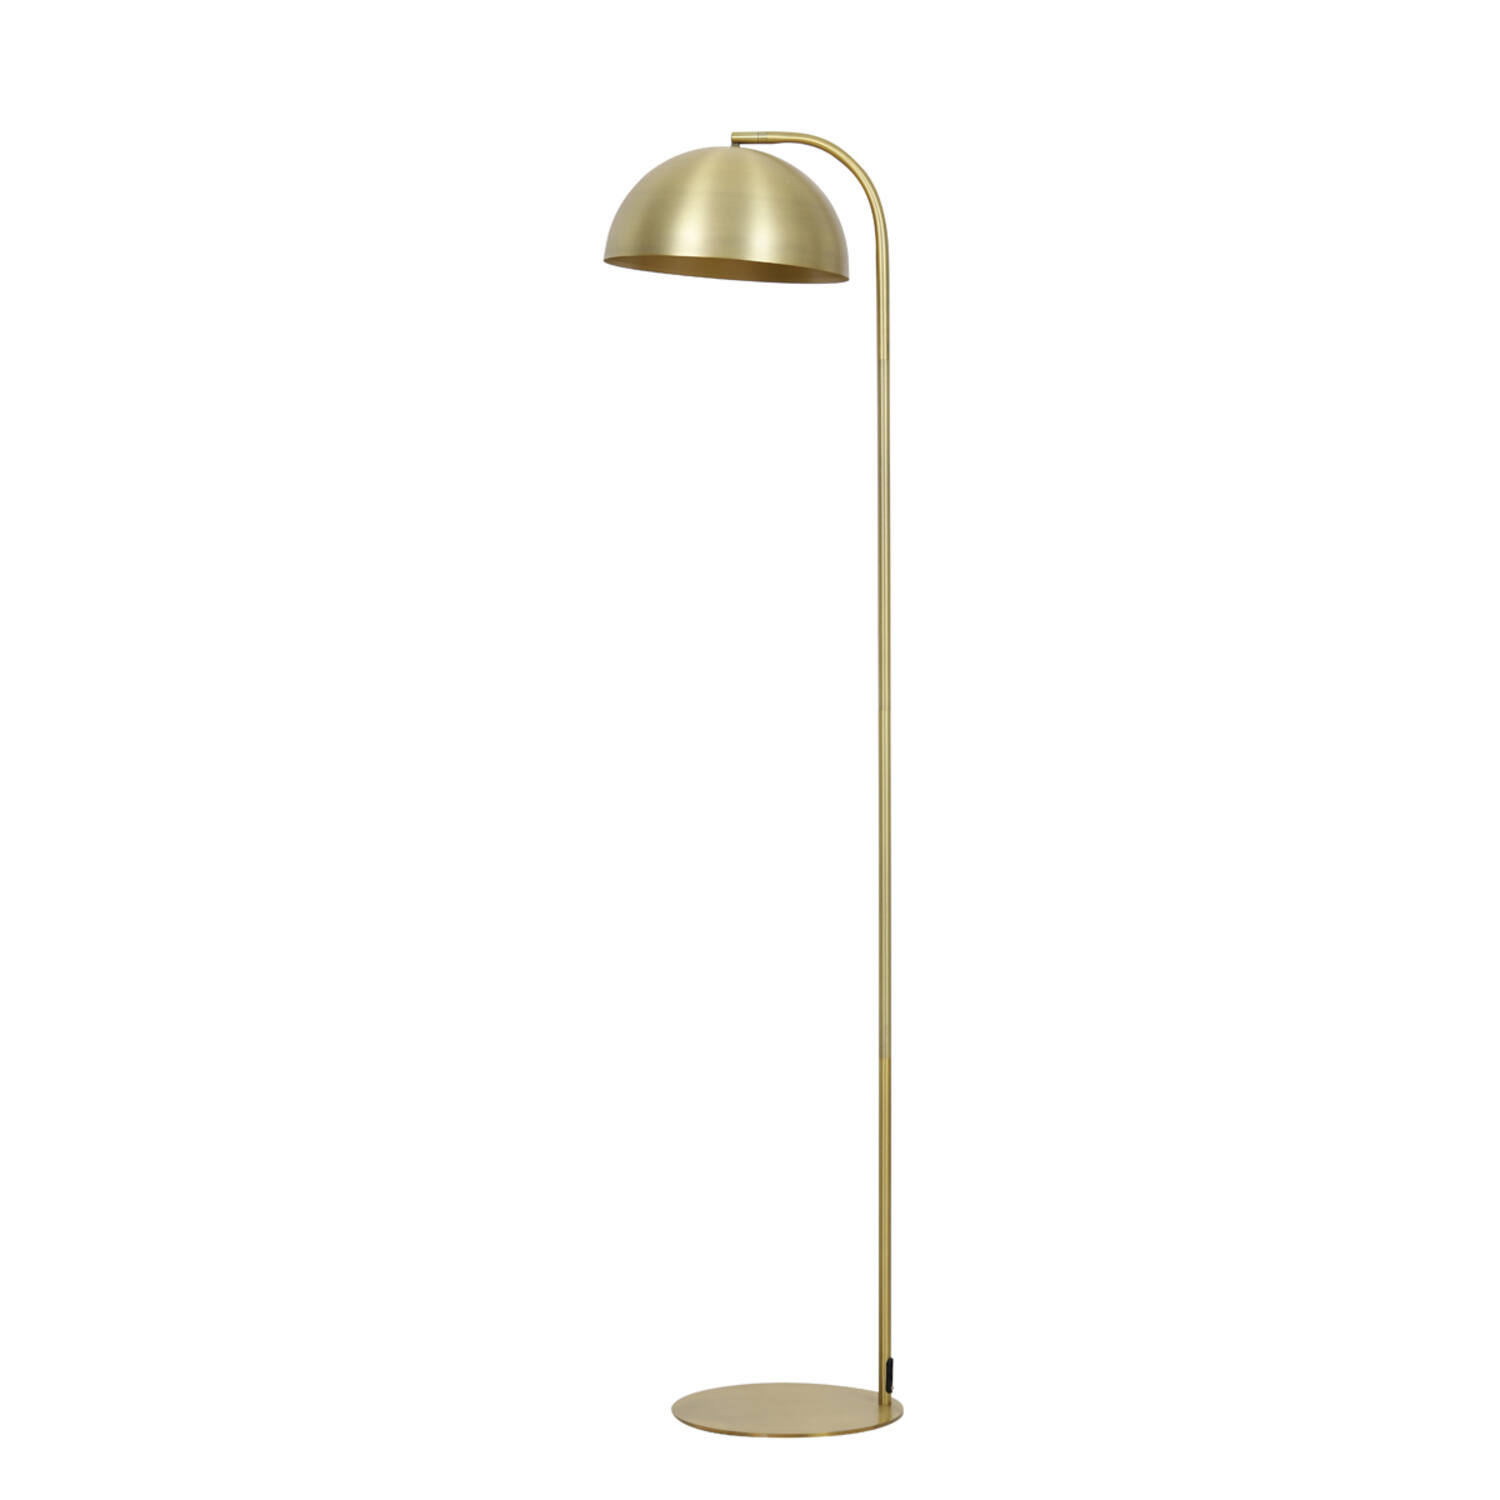 Vloerlamp Mette - Antiek Brons Light & Living Vloerlamp 1858785